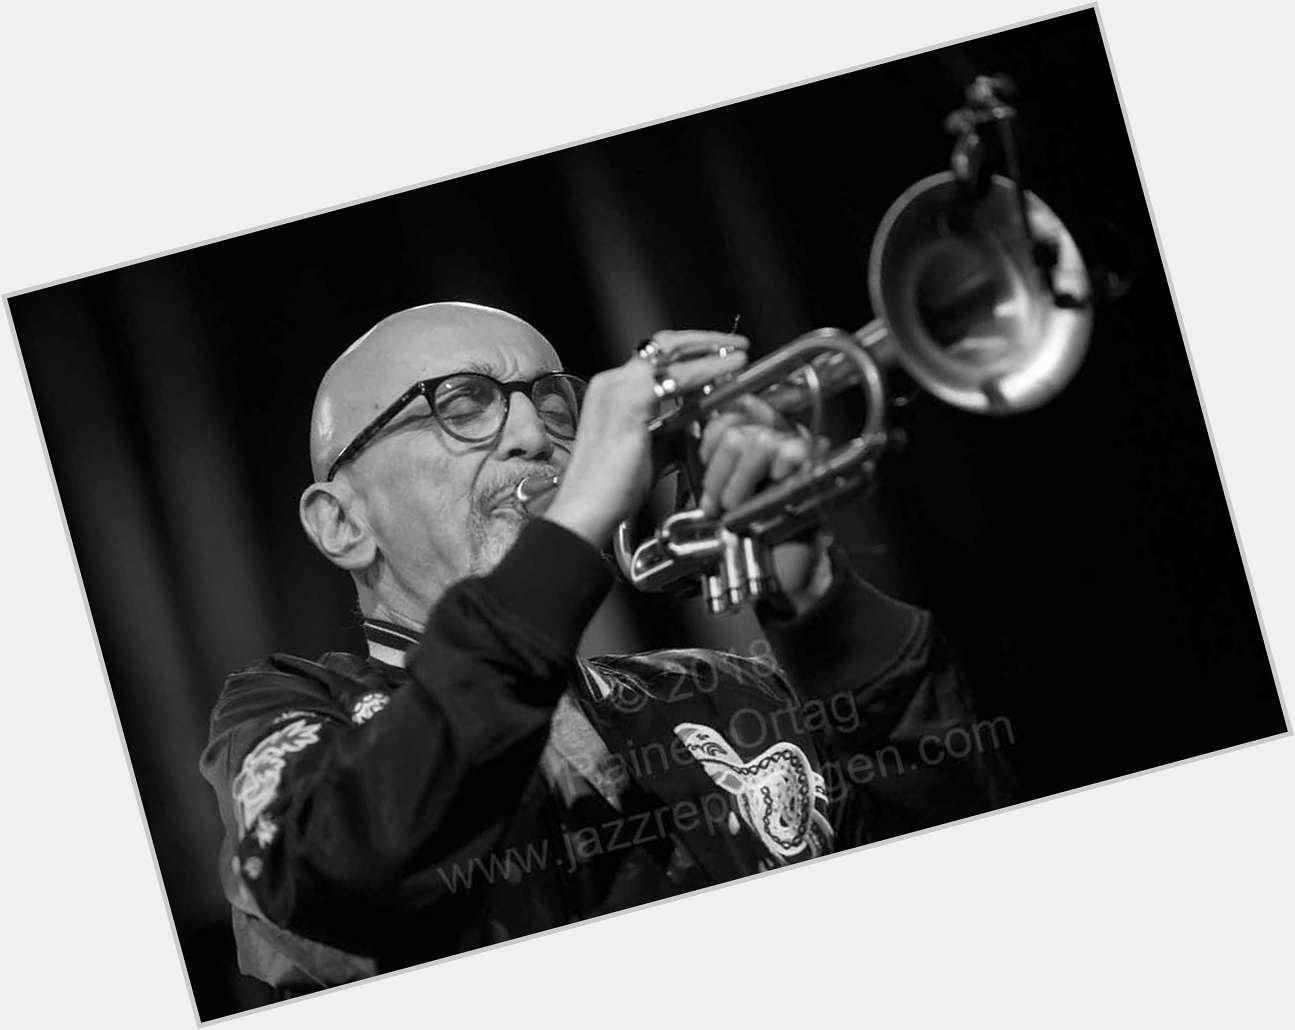 Happy Birthday the great Jazz Trumpeter Tomasz Stanko! 